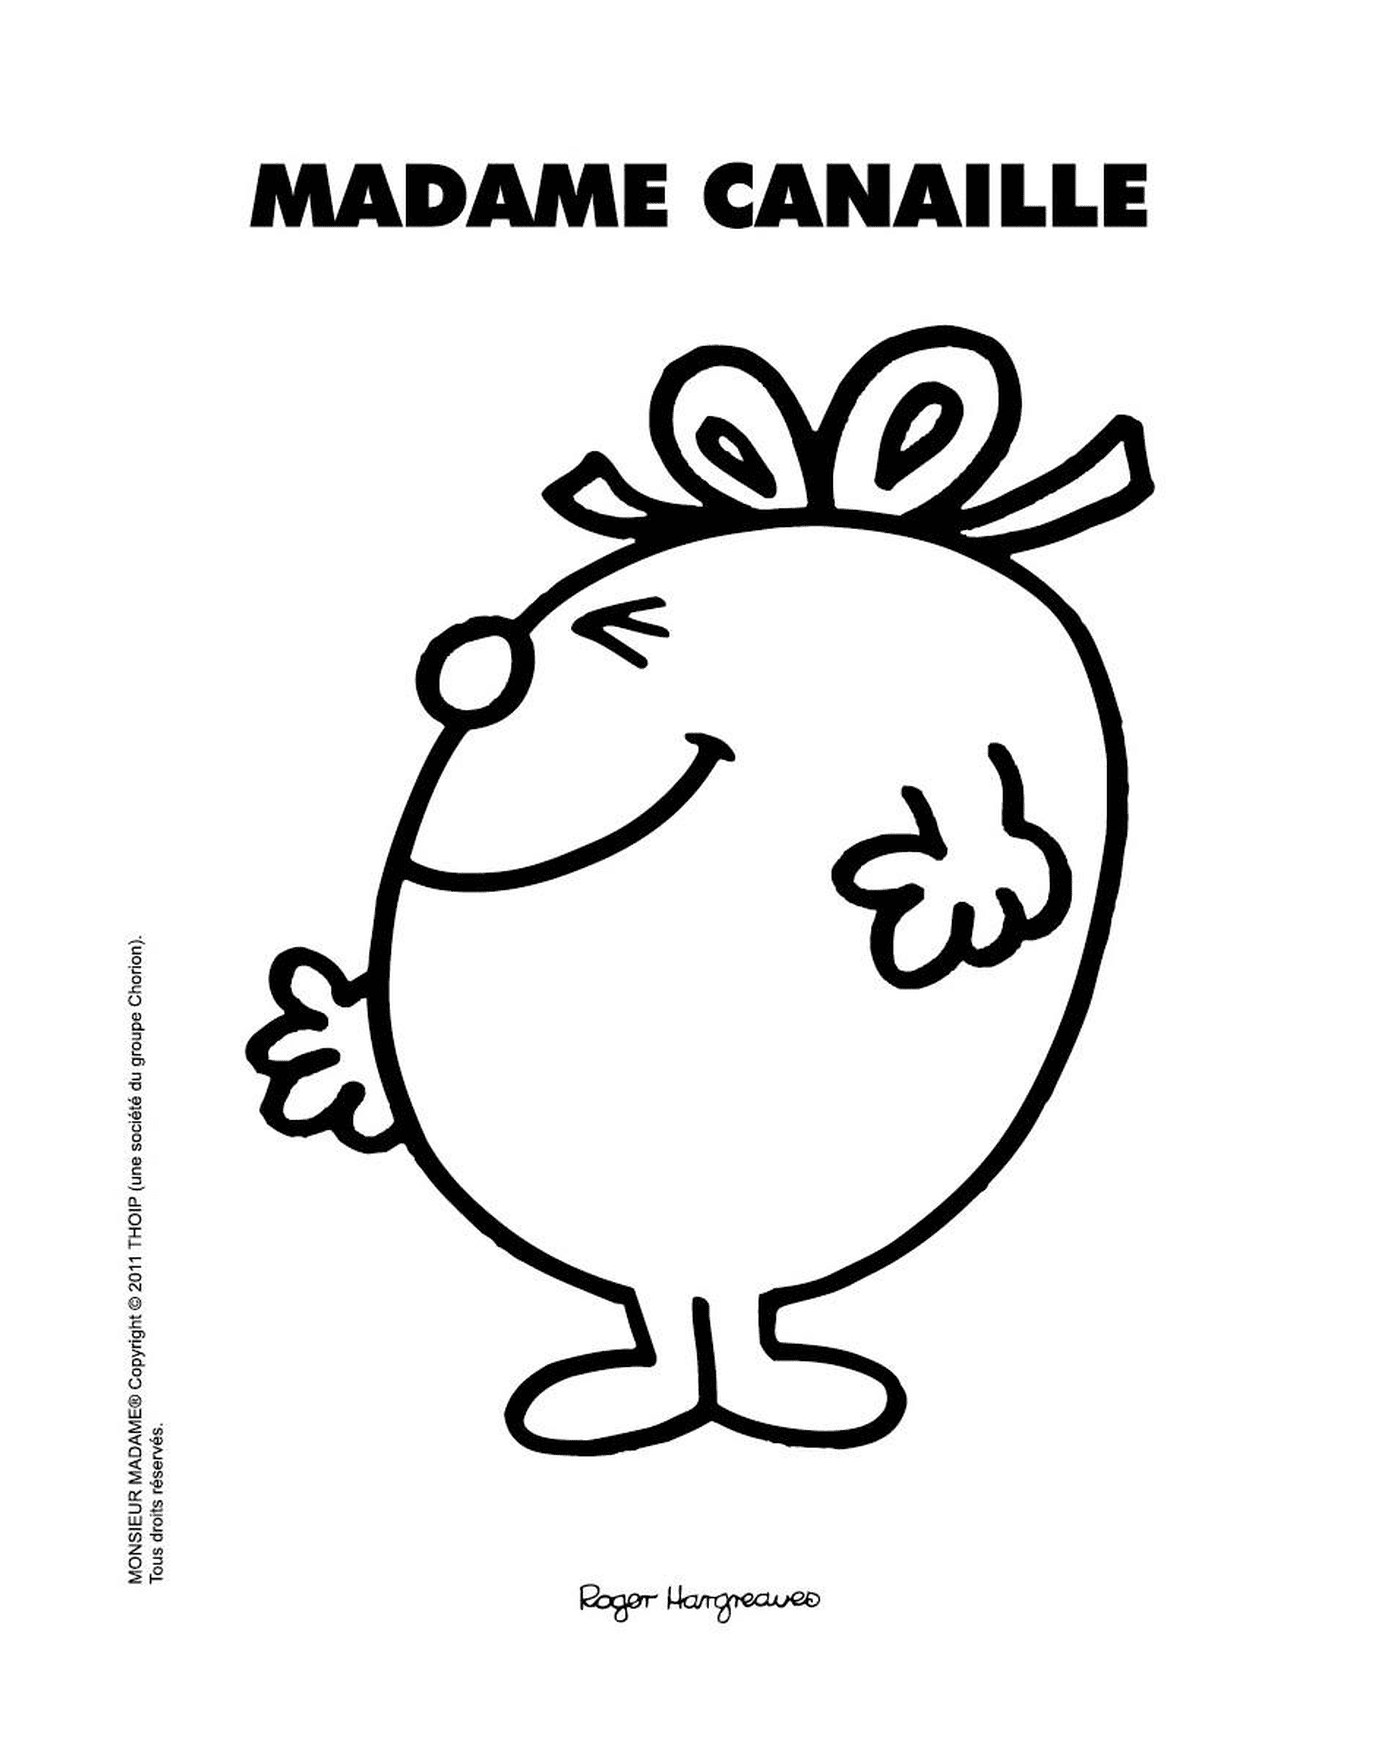 monsieur madame canaille